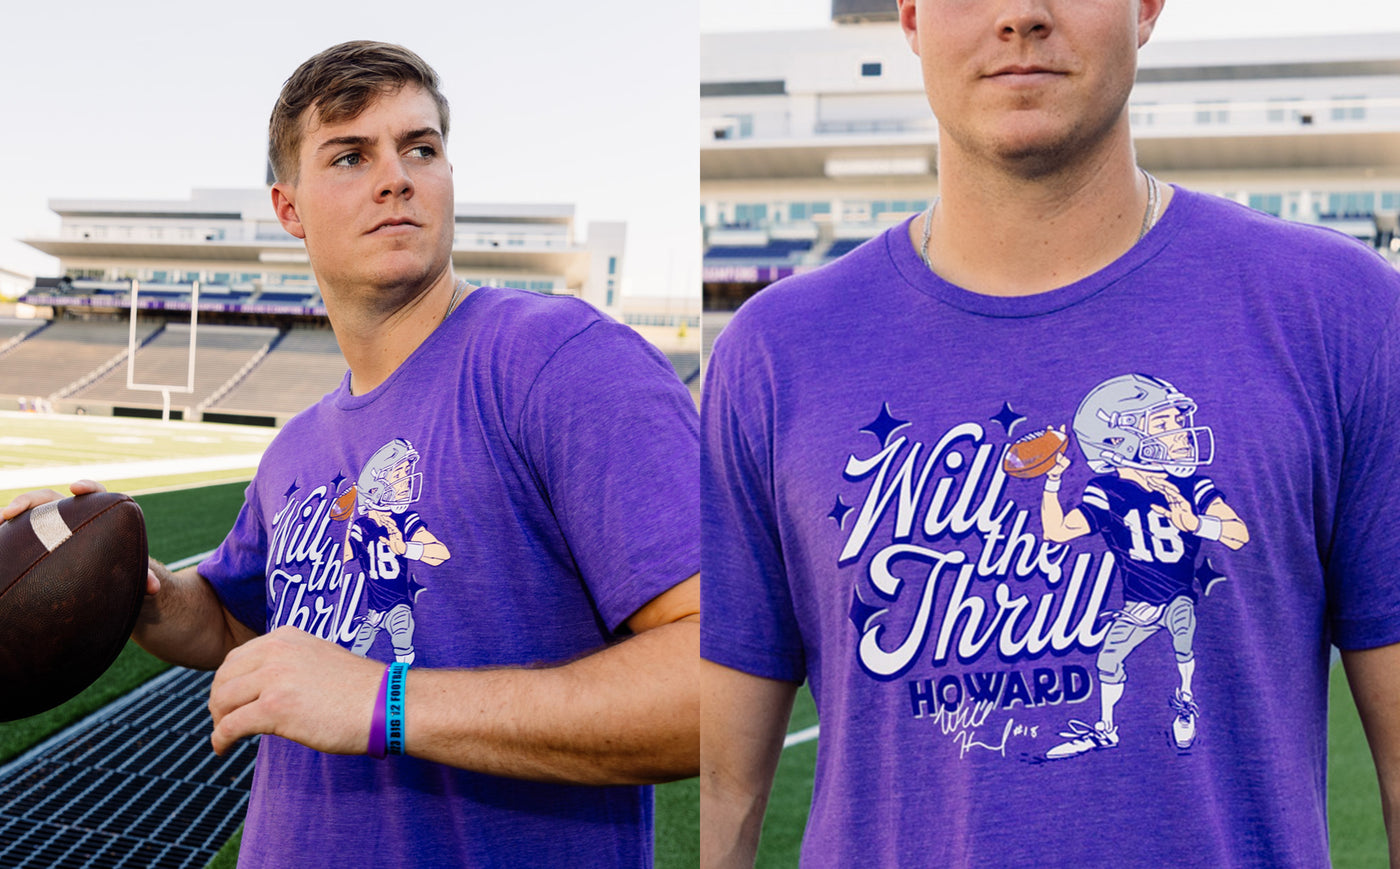 Baltimore Gridiron Purple T-Shirt - No Shave Life